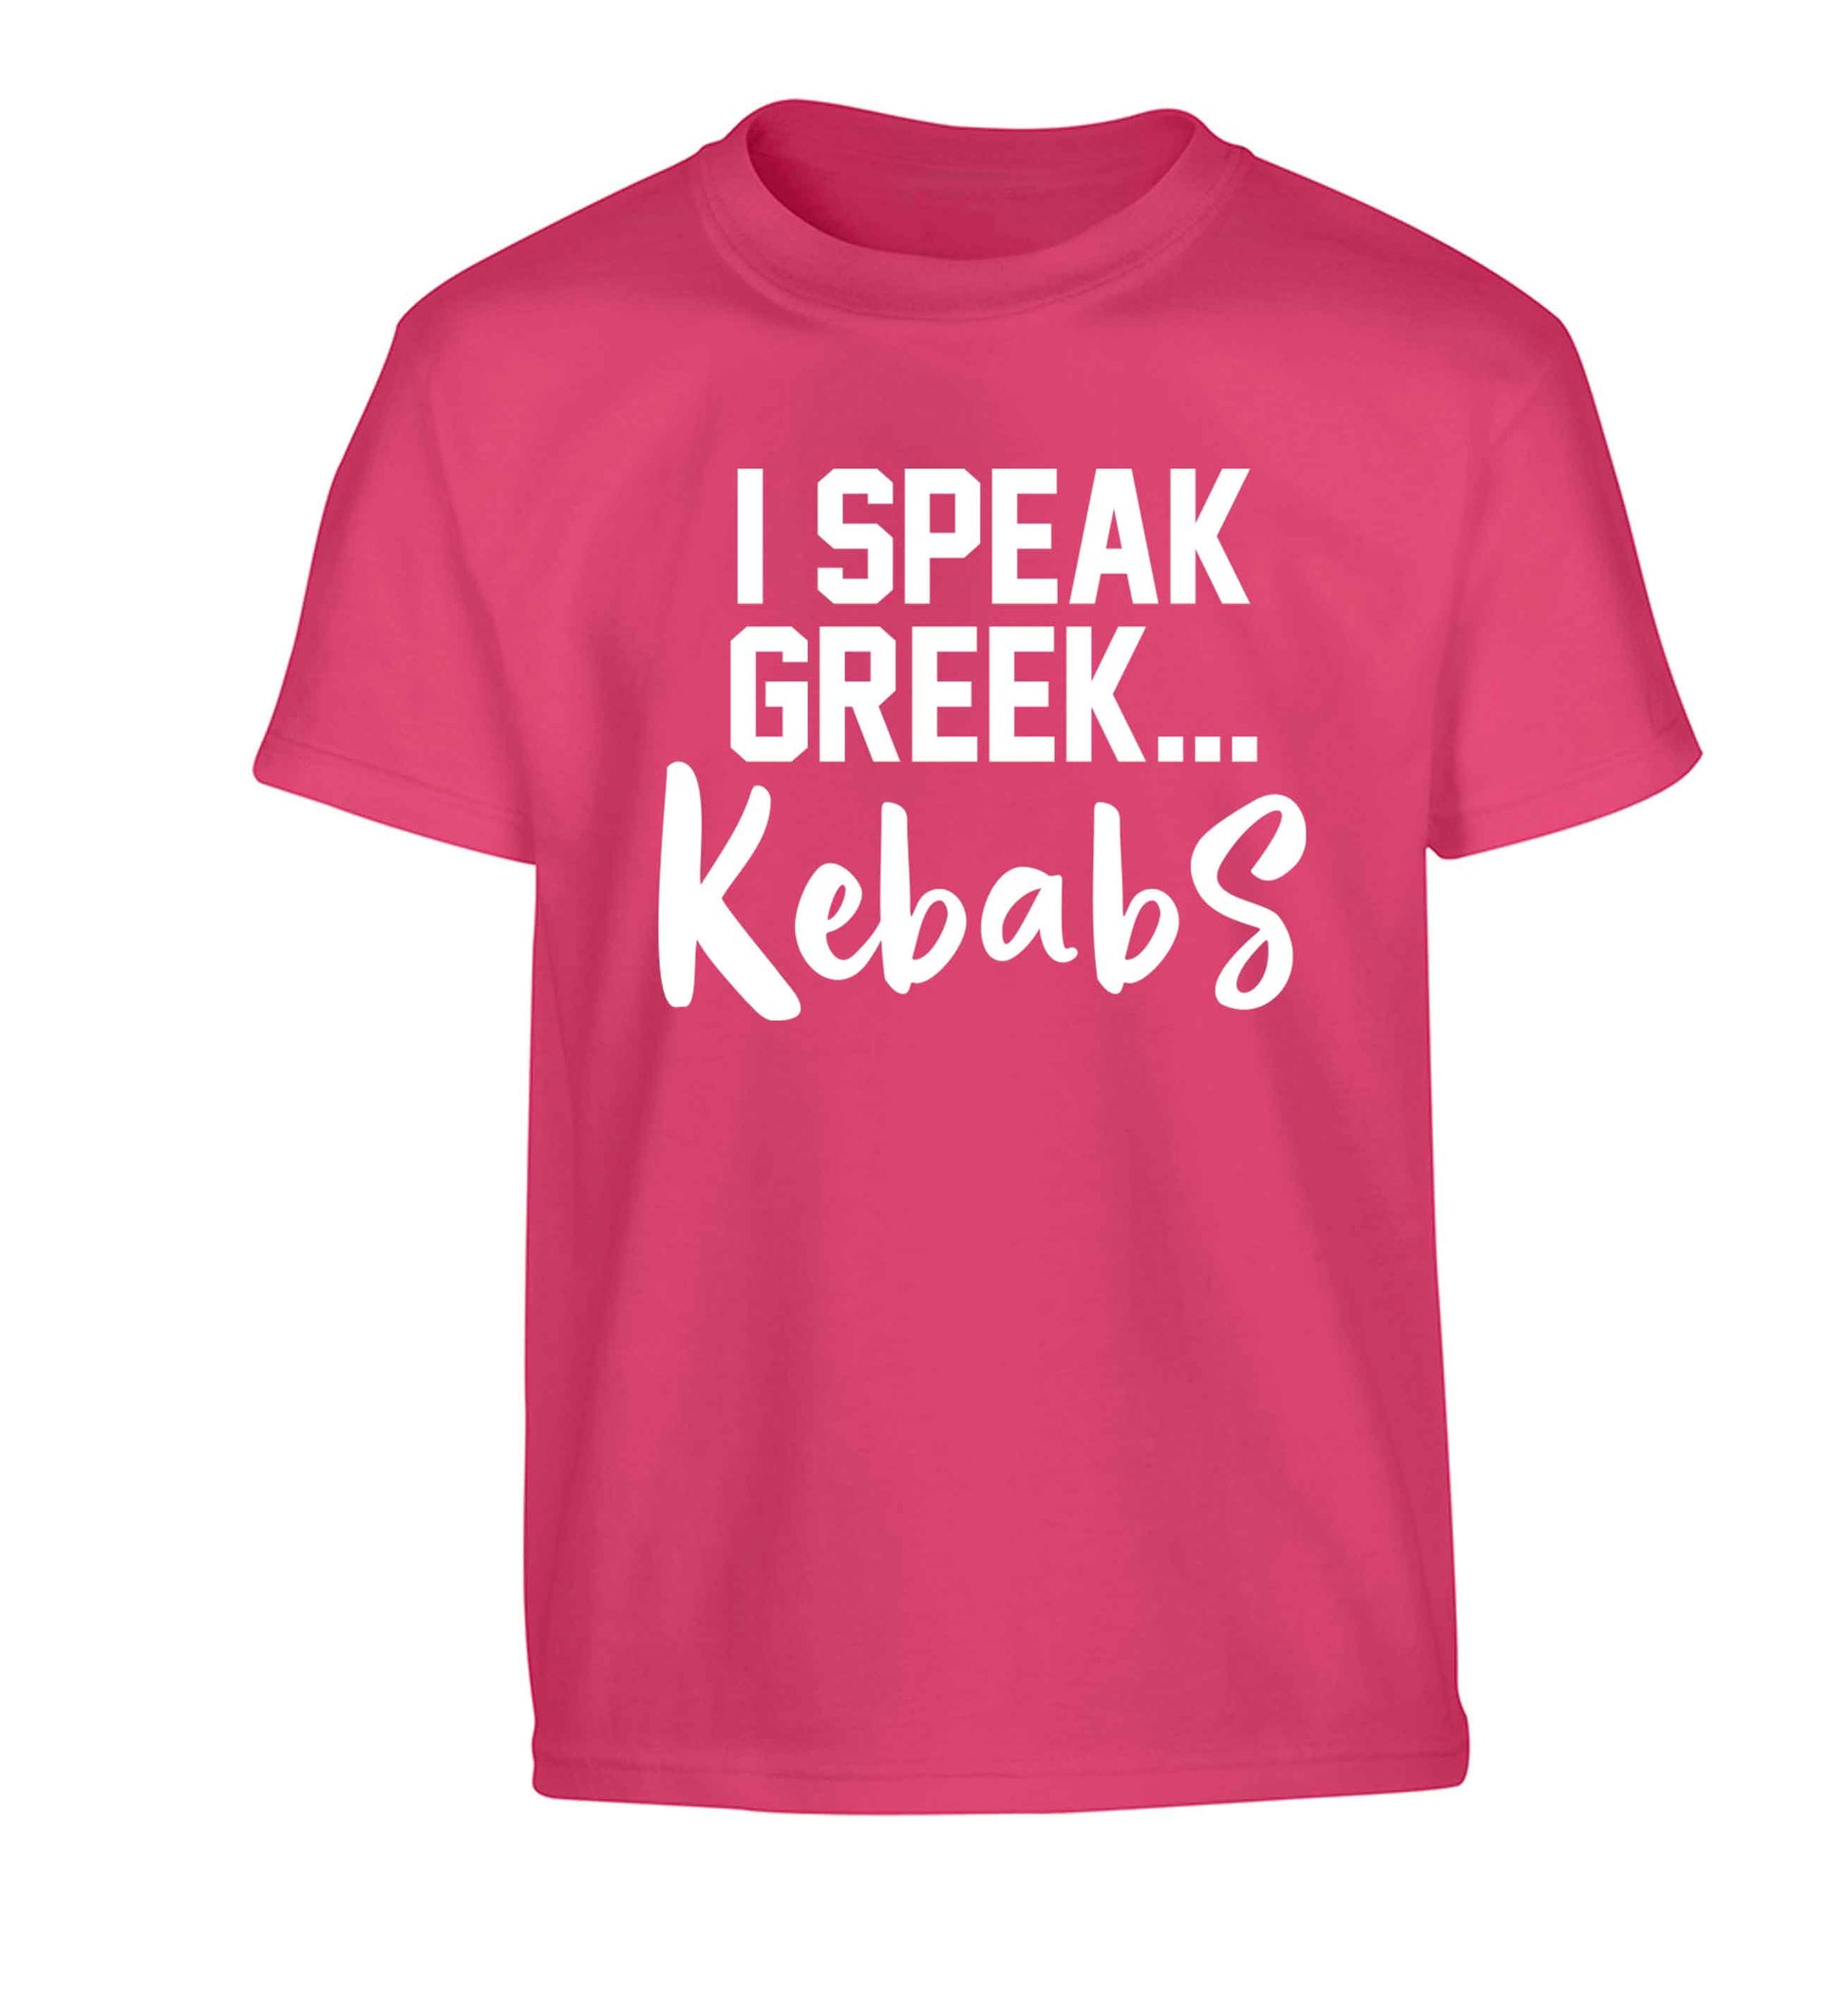 I speak Greek...kebabs Children's pink Tshirt 12-13 Years